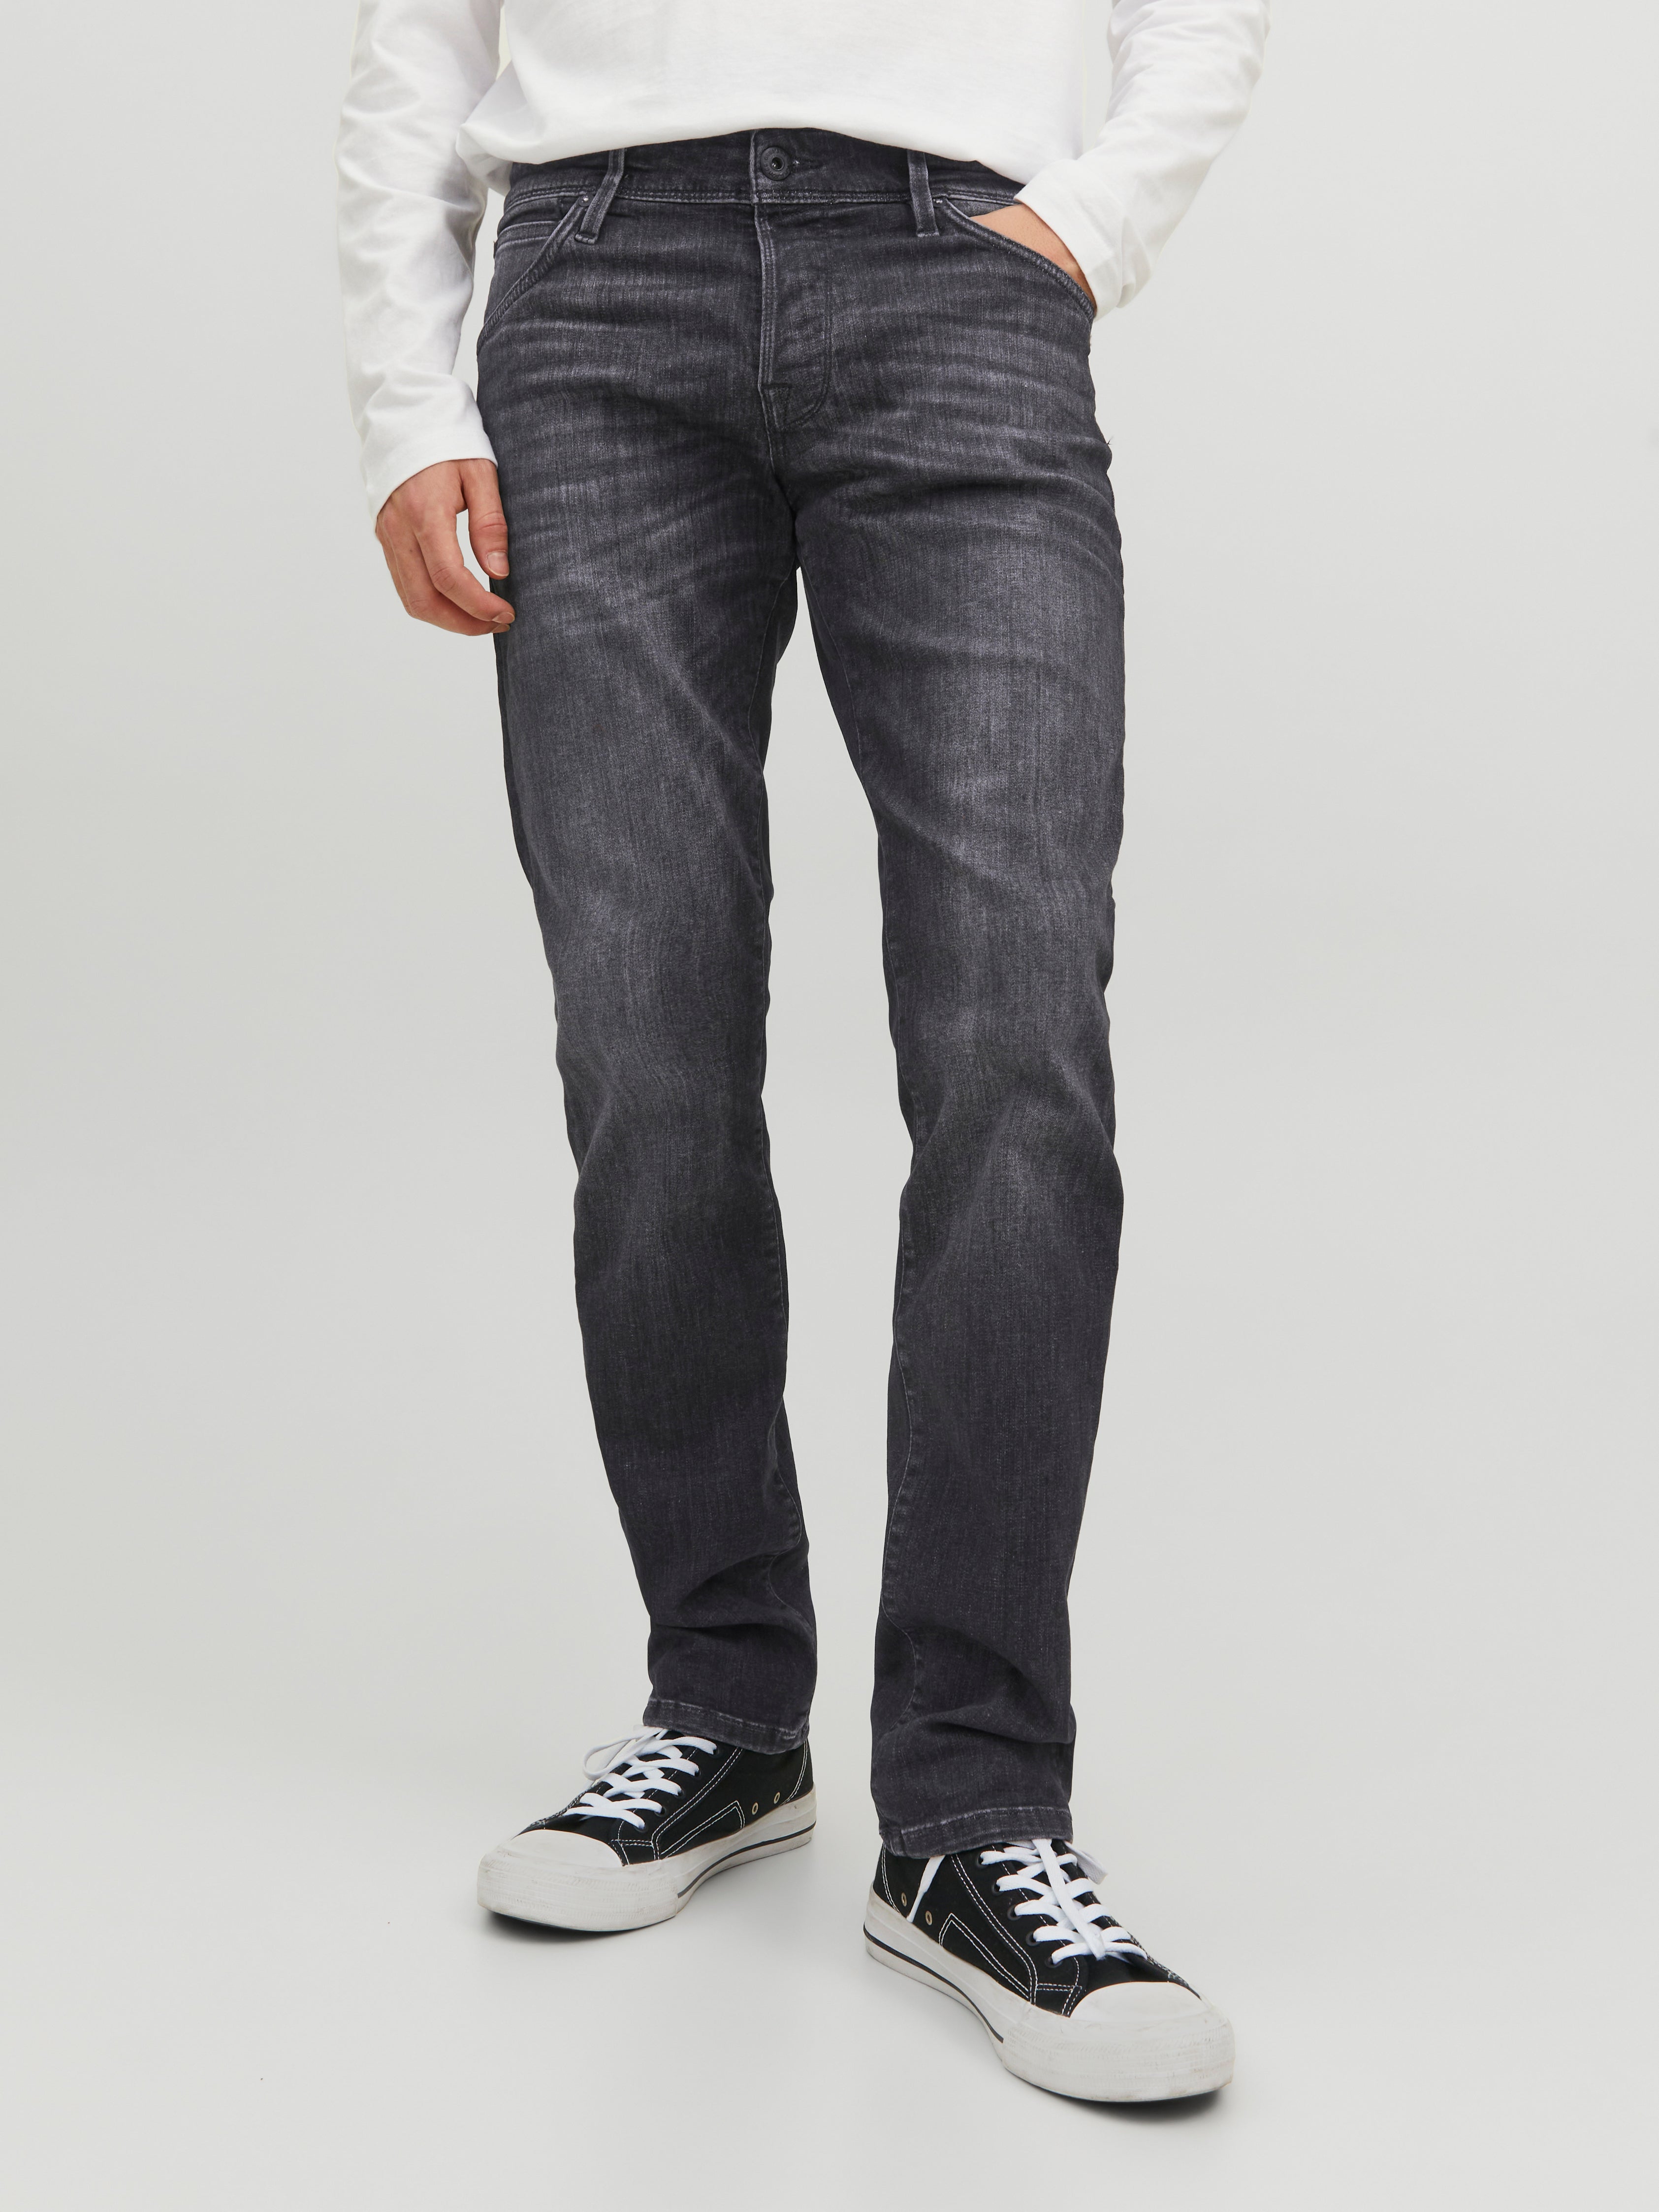 MEN FASHION Jeans Worn-in discount 57% Jack & Jones Jeggings & Skinny & Slim Blue 40                  EU 